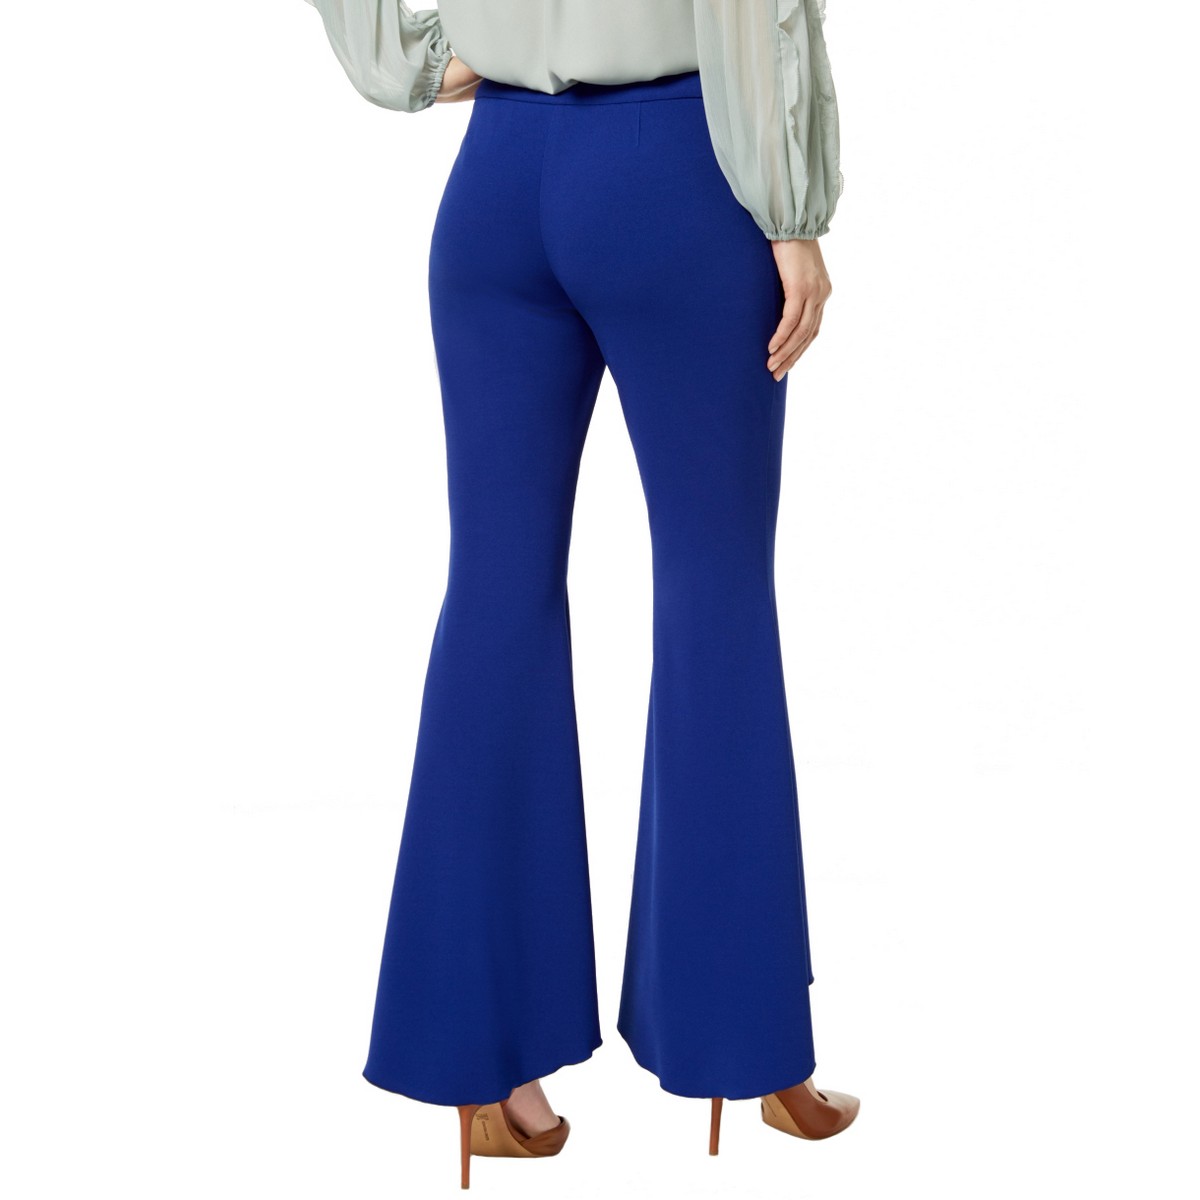 INC NEW Women's Ruffled Darted Regular Mid Rise Flare Pants TEDO | eBay